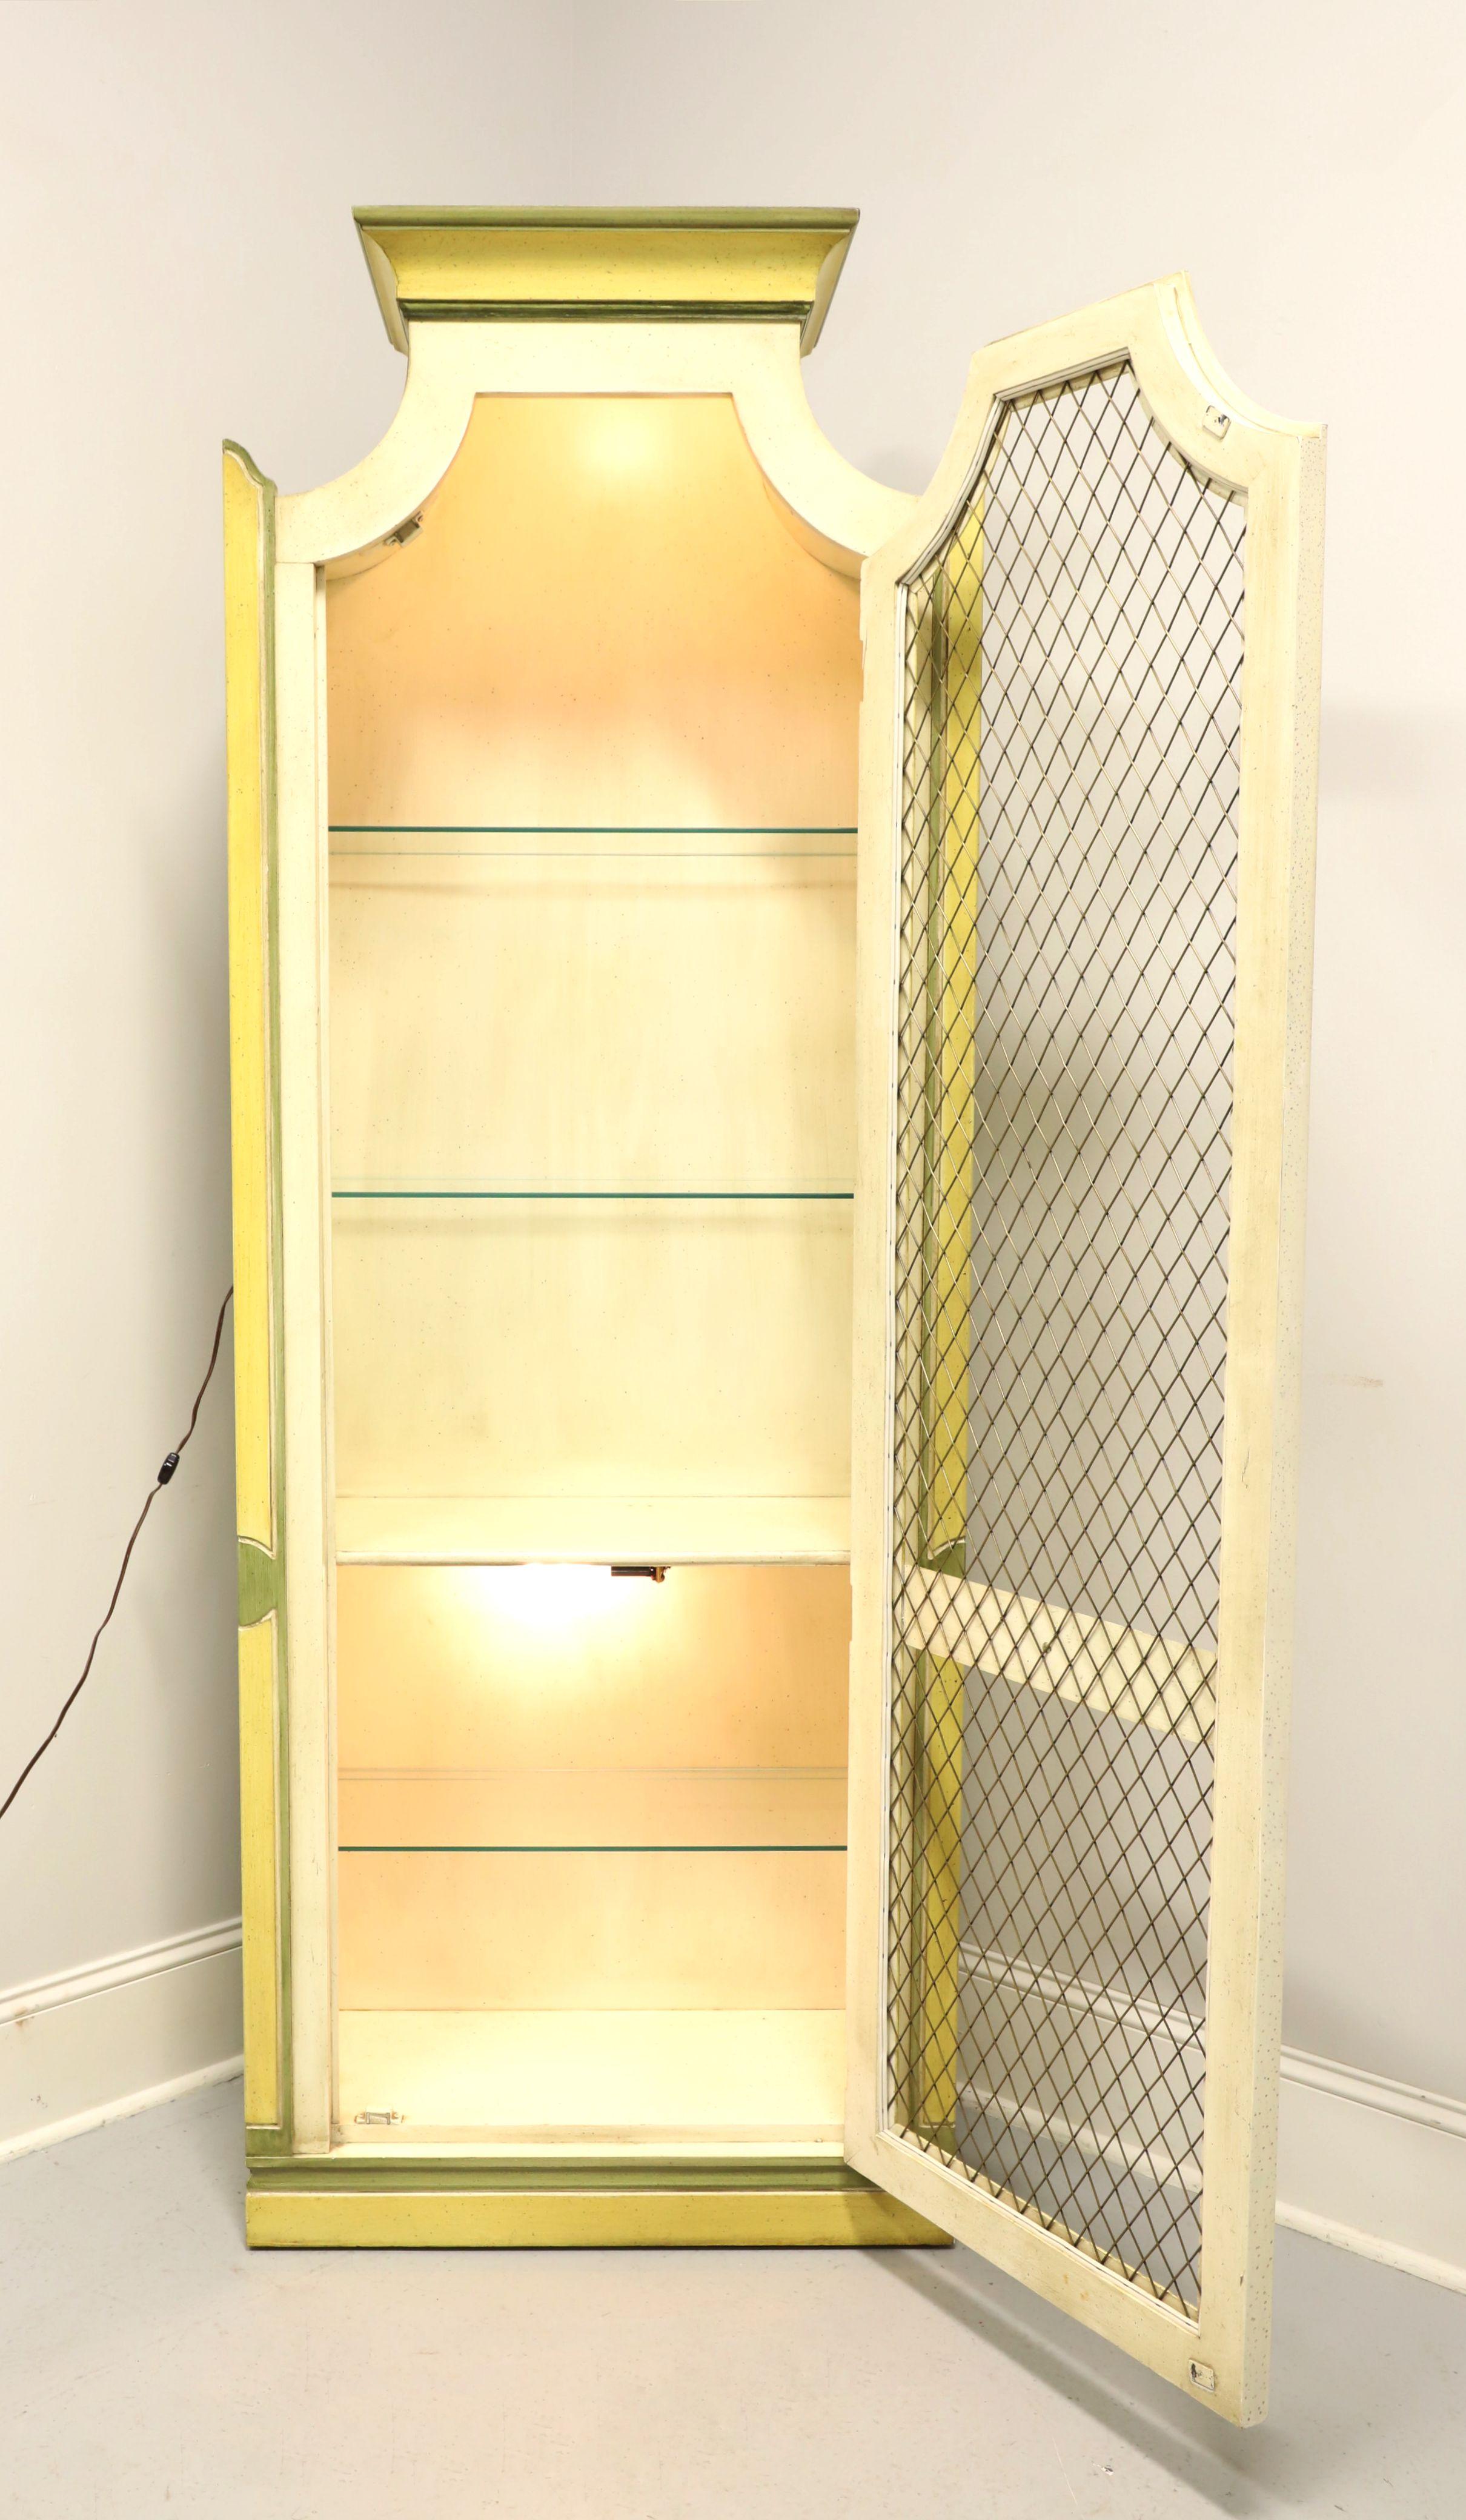 gold curio cabinet